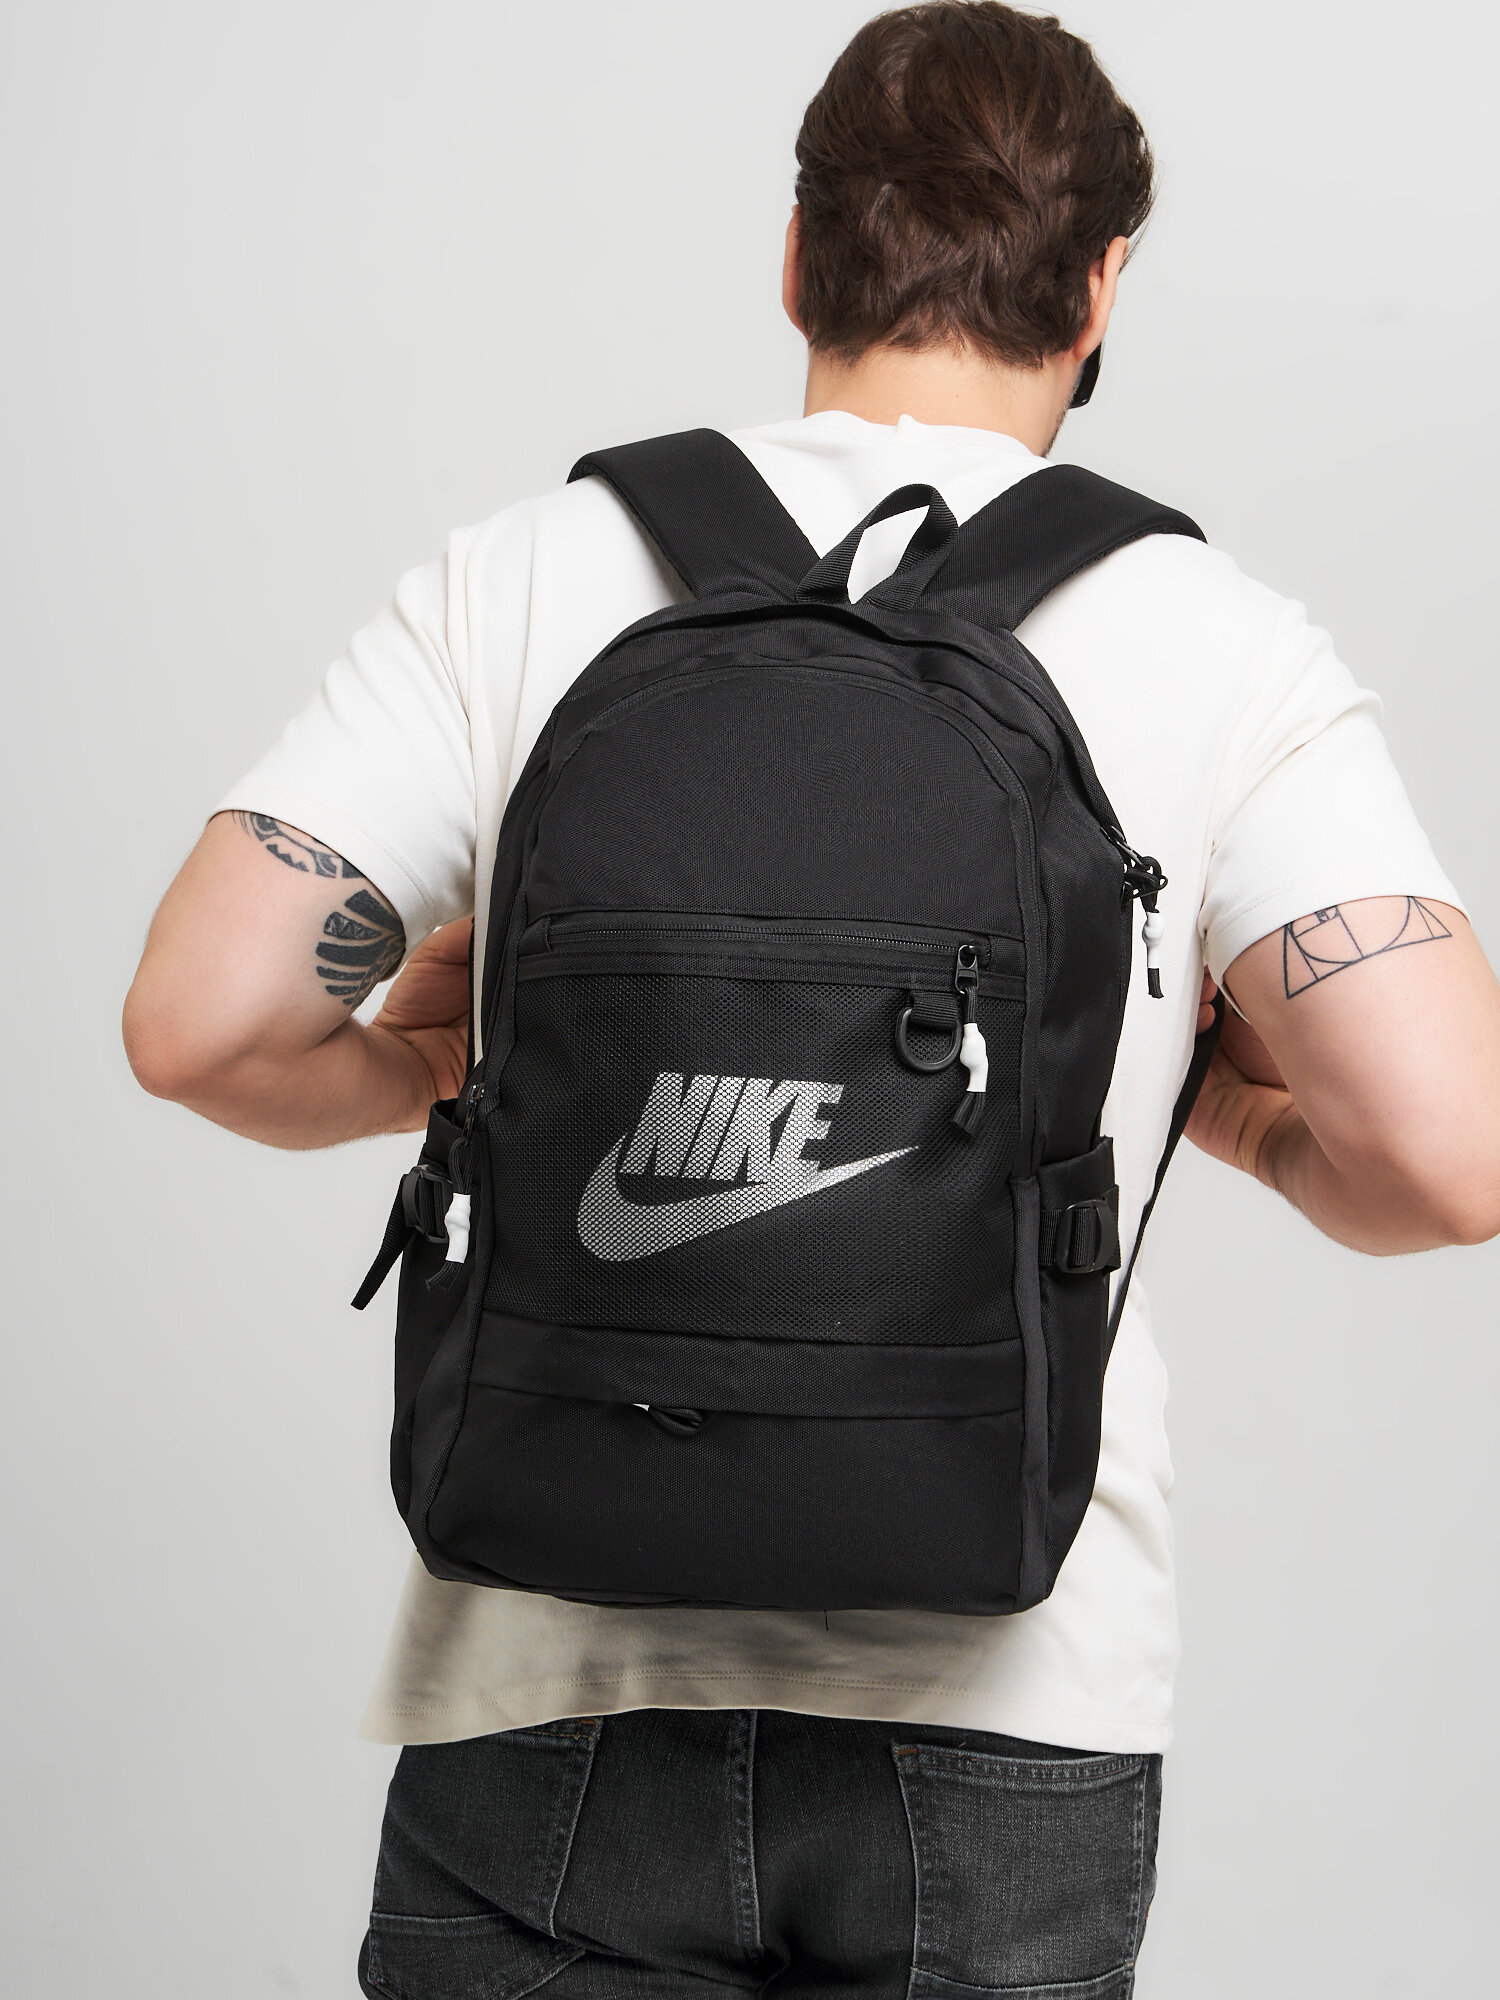 Рюкзак Nike для повседневной носки